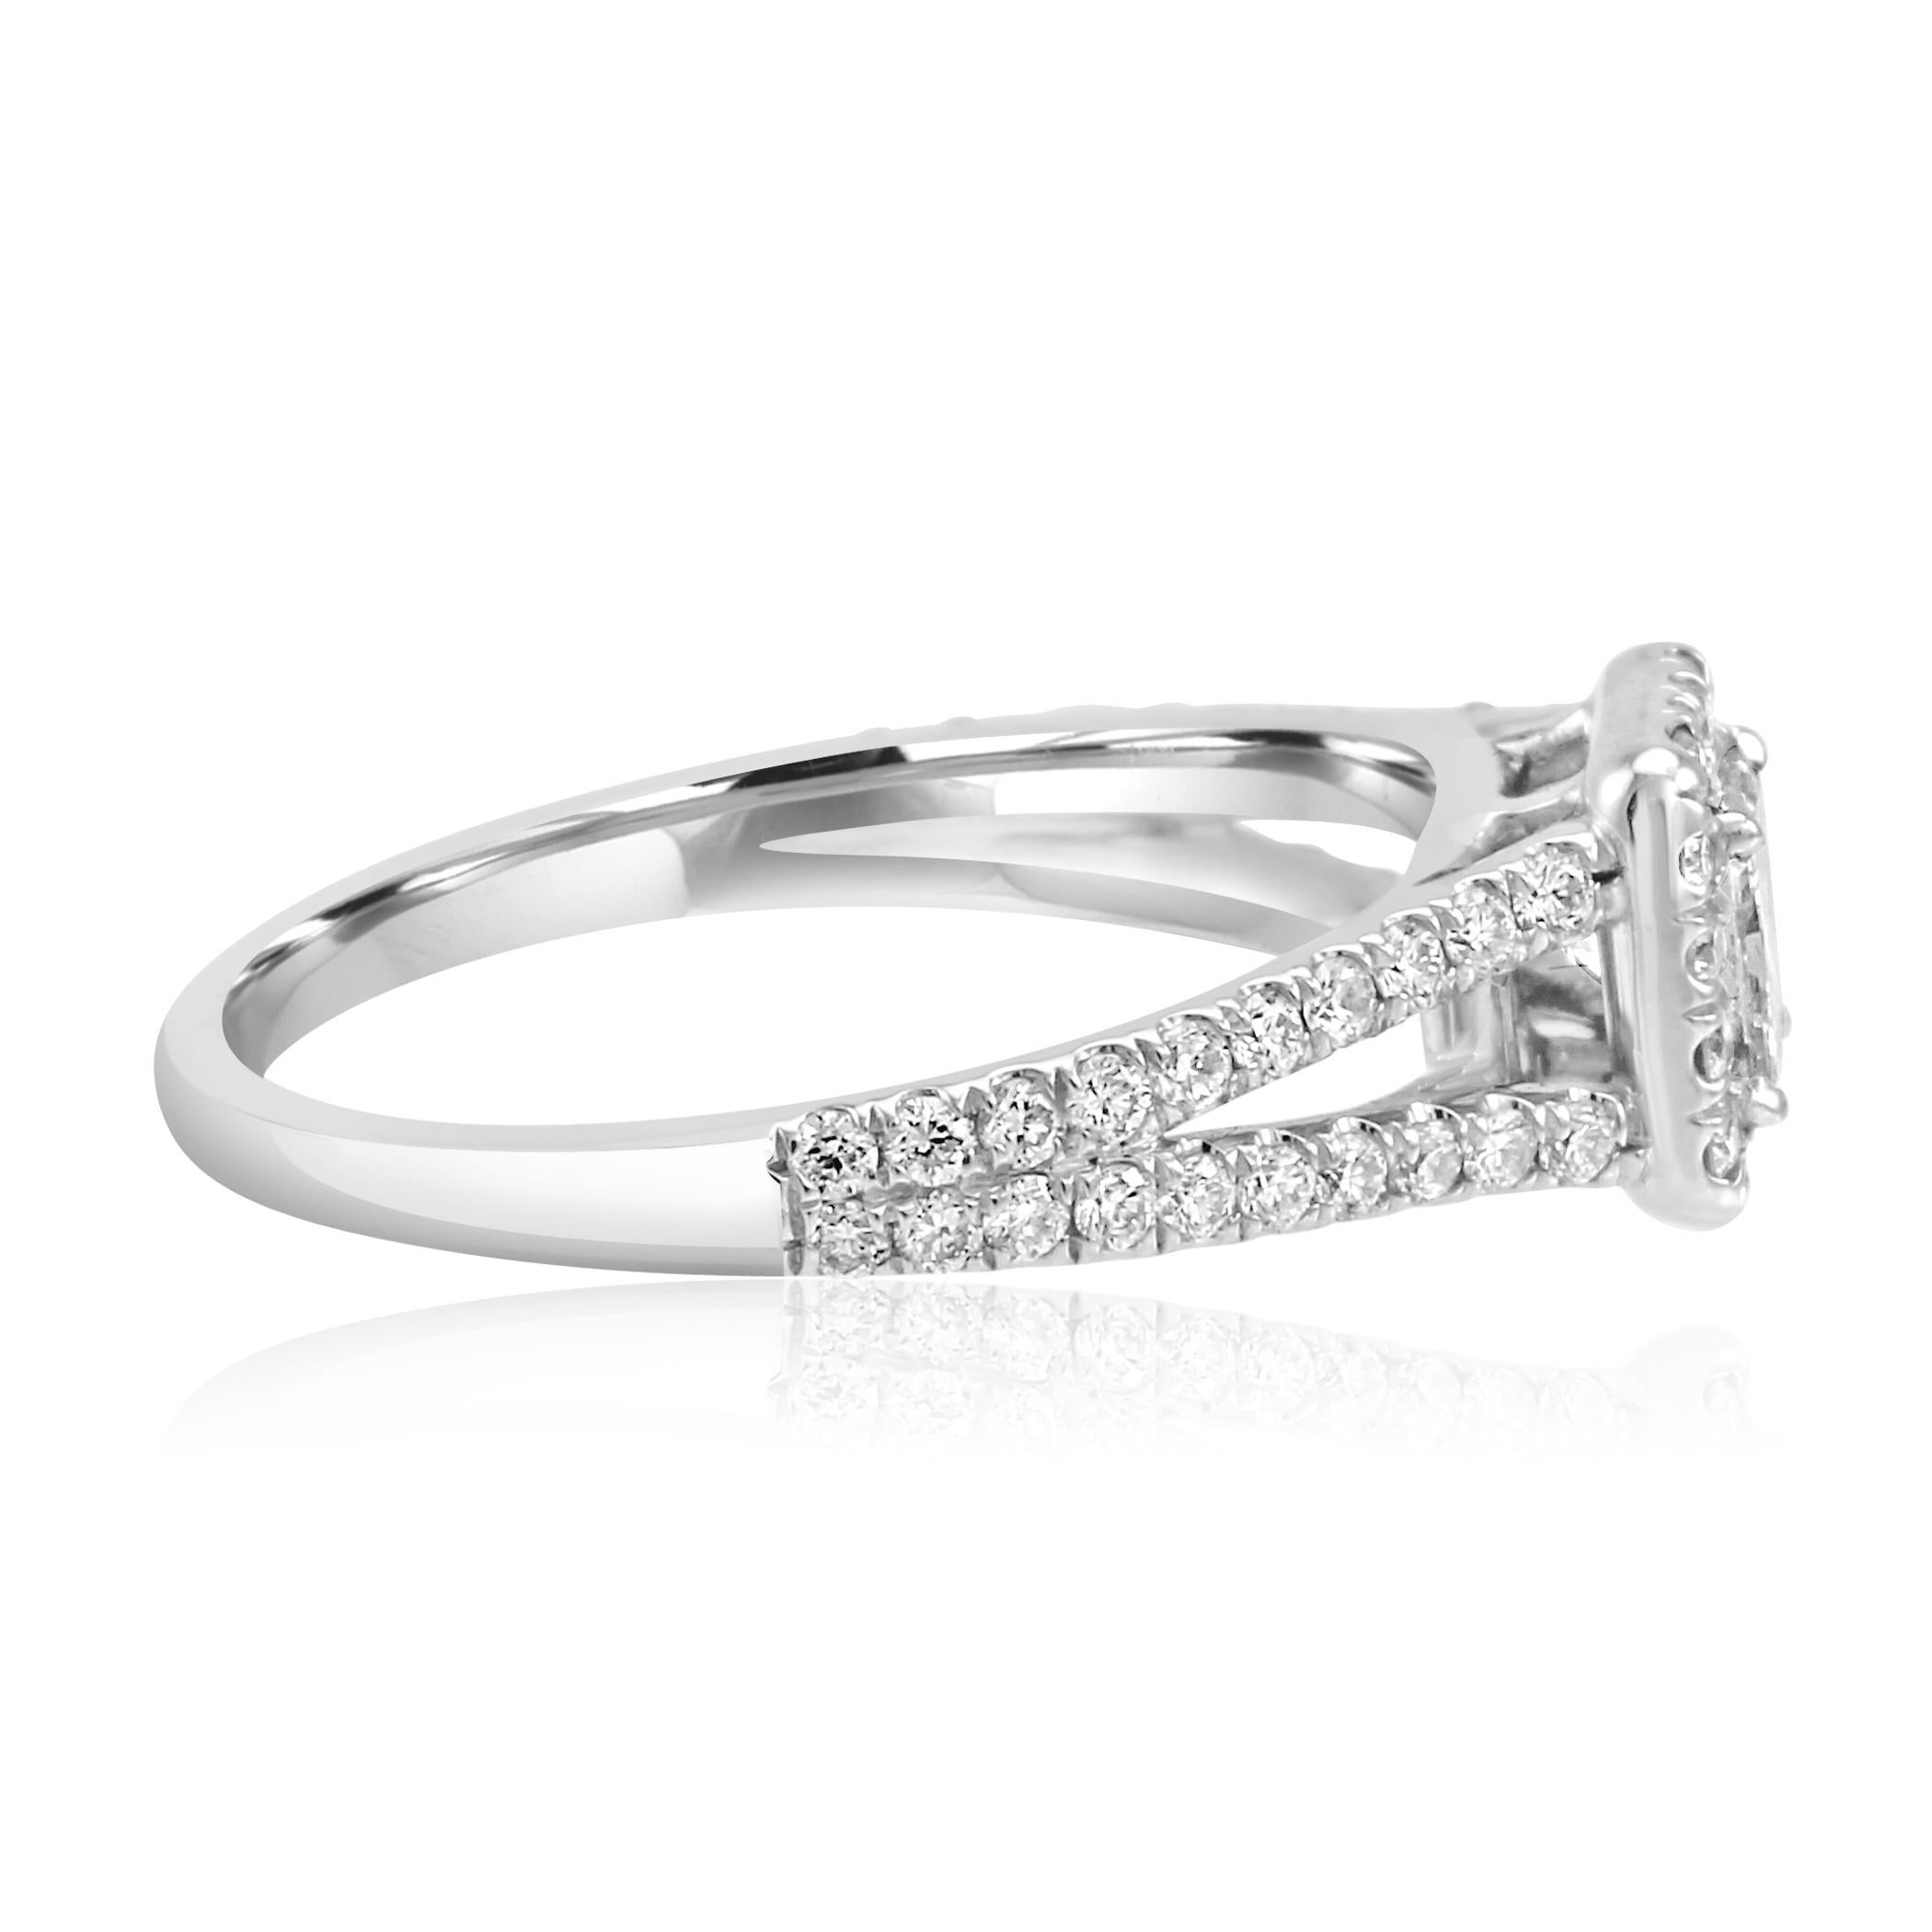 2 carat princess cut solitaire diamond ring